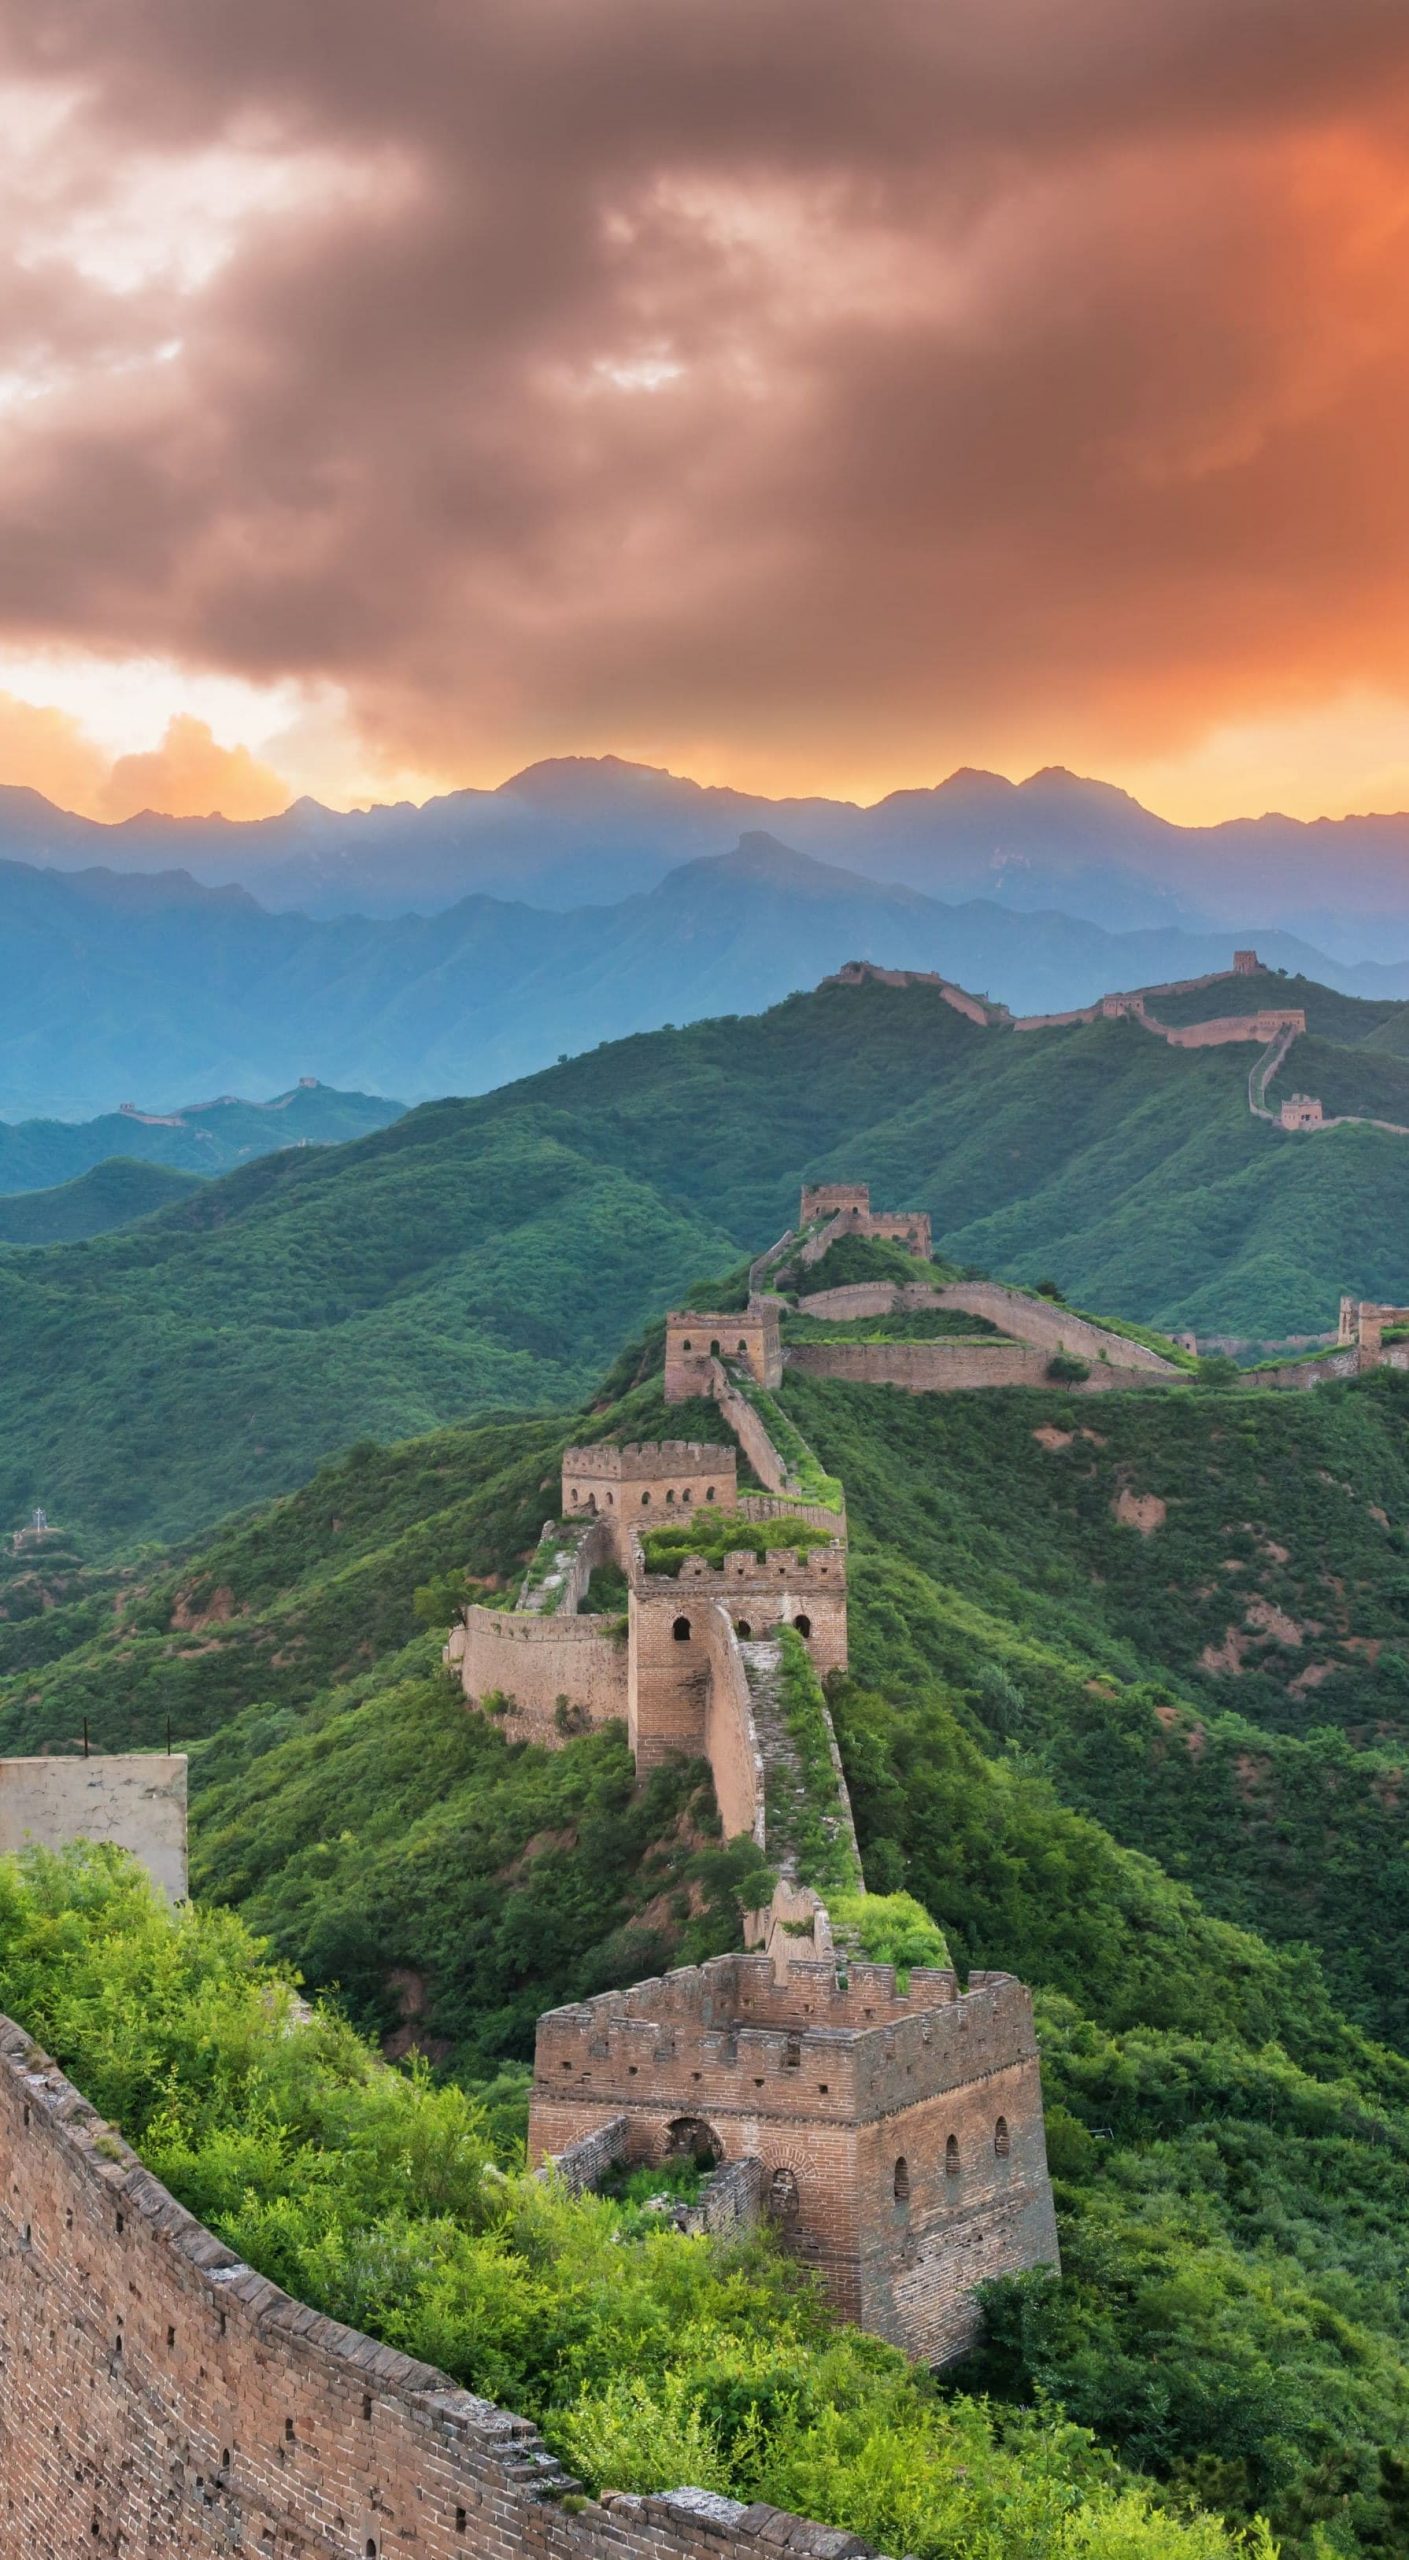 35 Great Wall of China Wallpapers [ 4k + HD ]